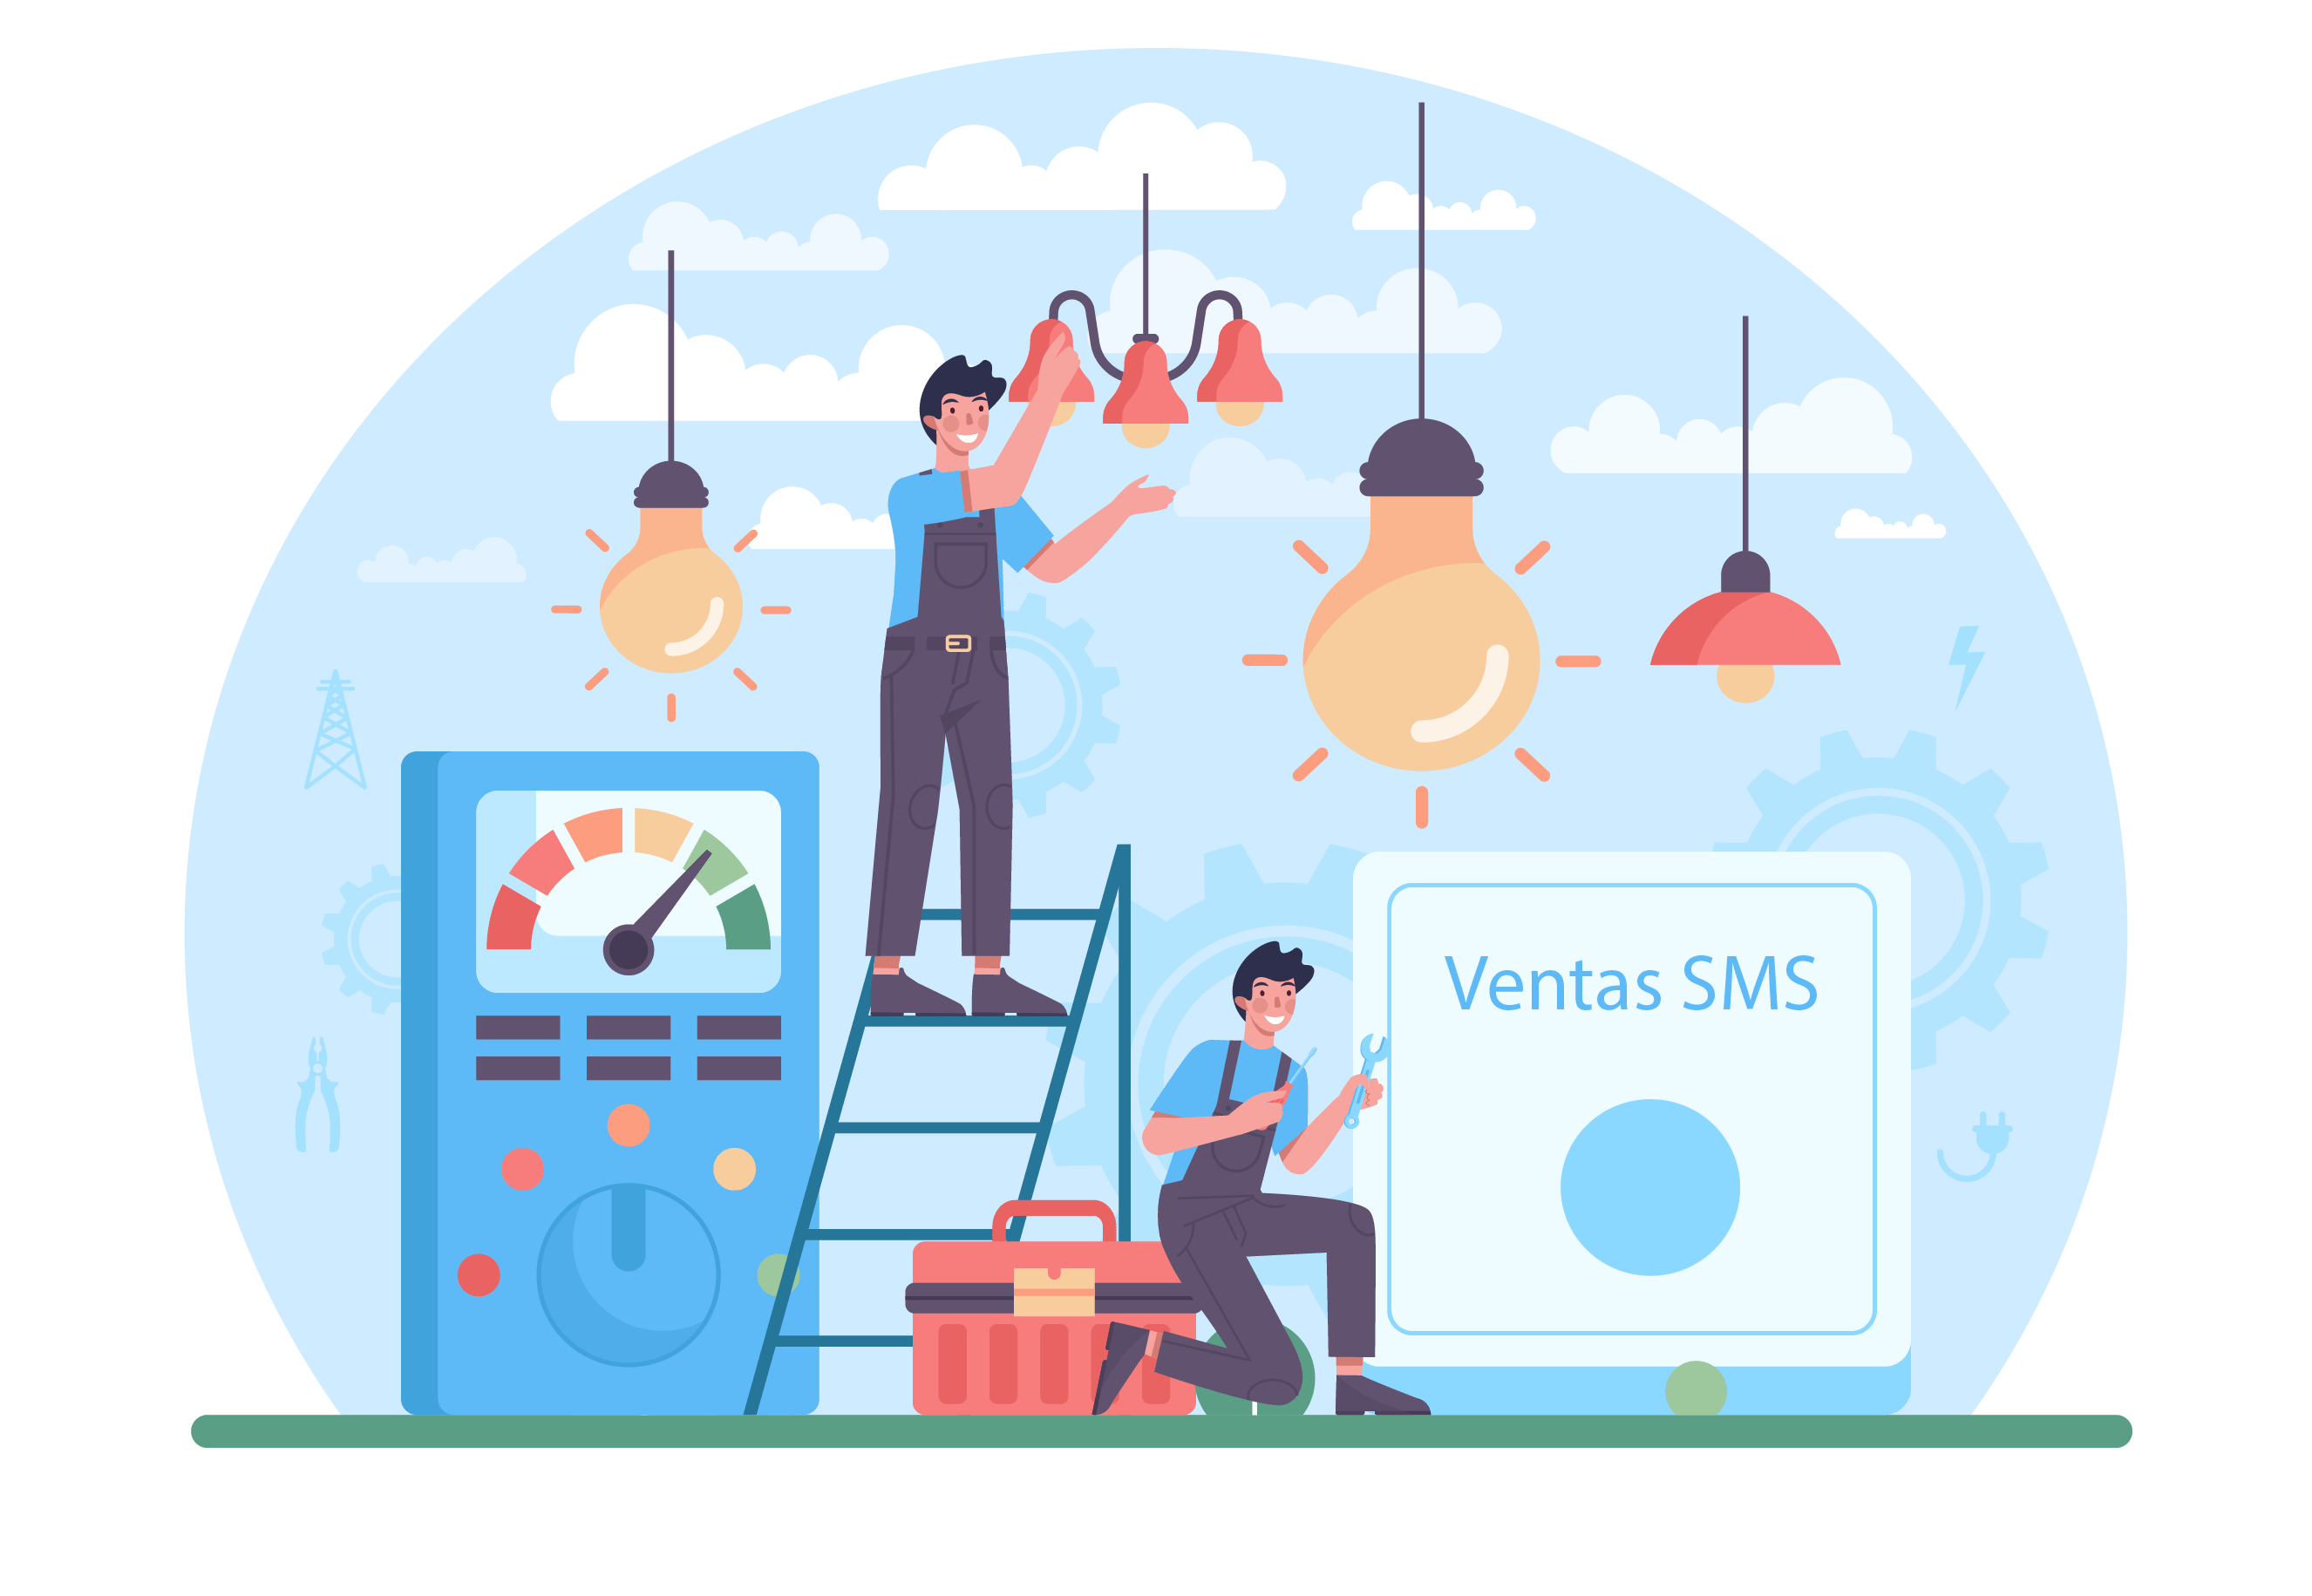 Ventas SMS for Utilities Industry img